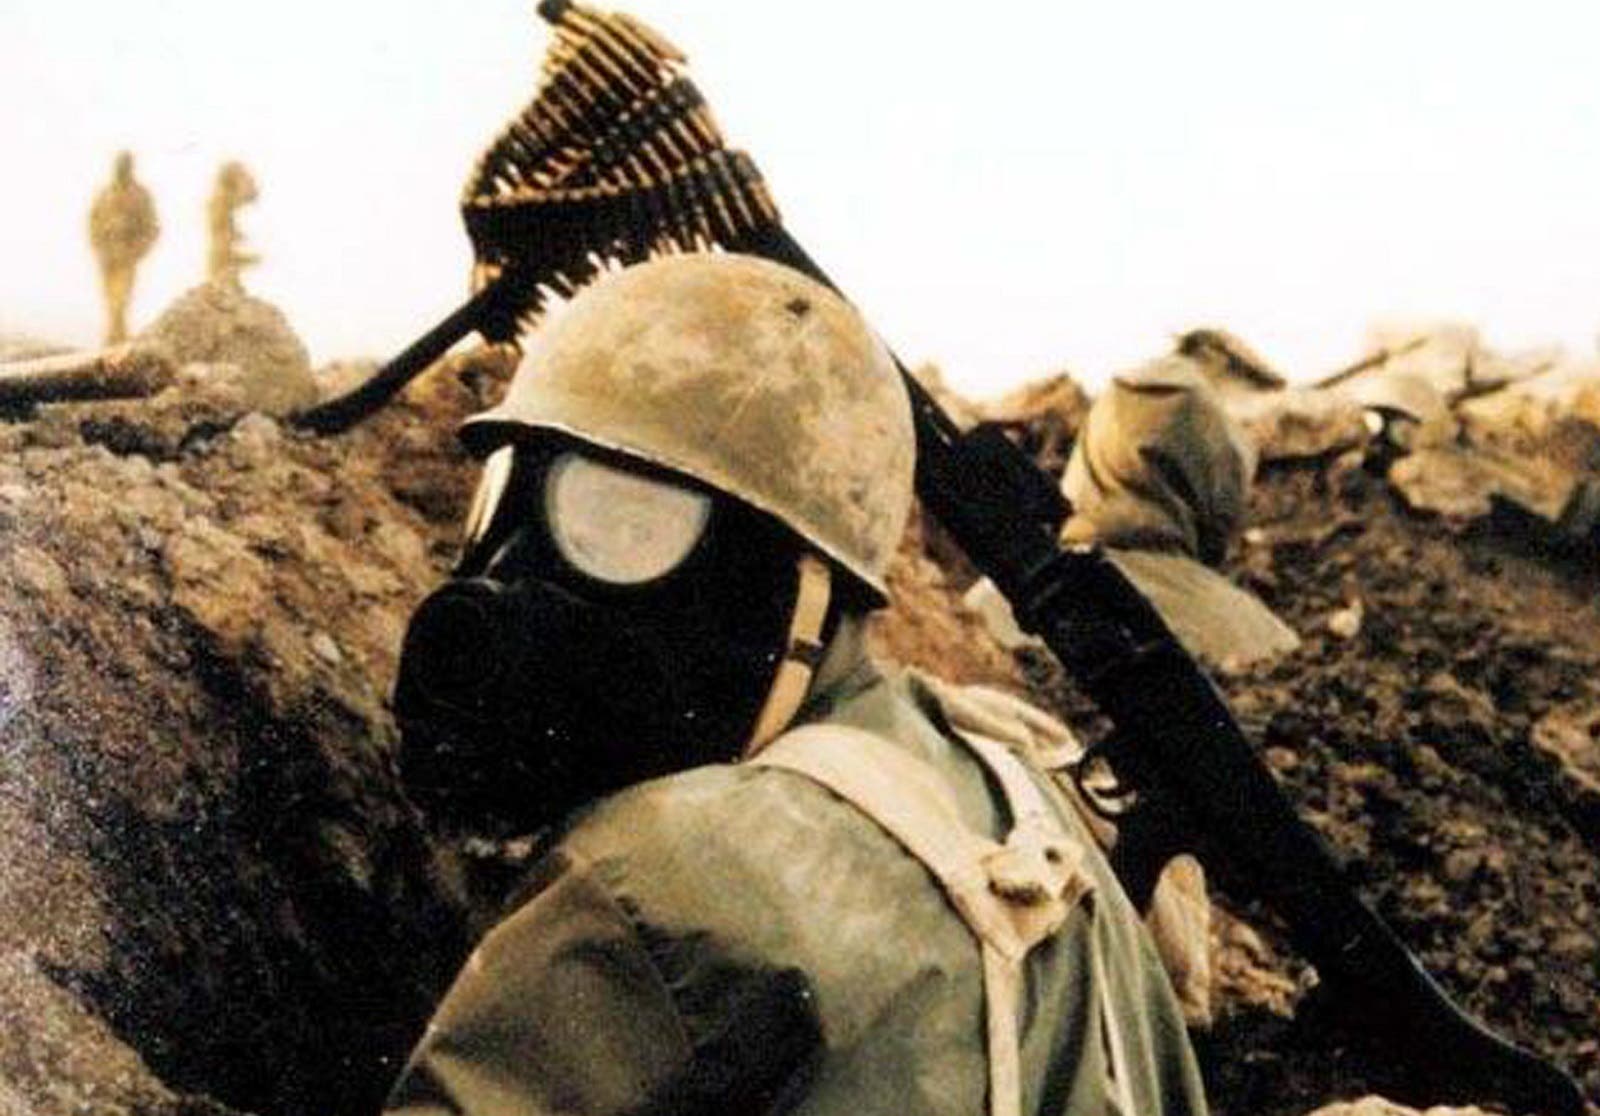 New Al Arabiya series shows rare footage of IranIraq War 40 years on